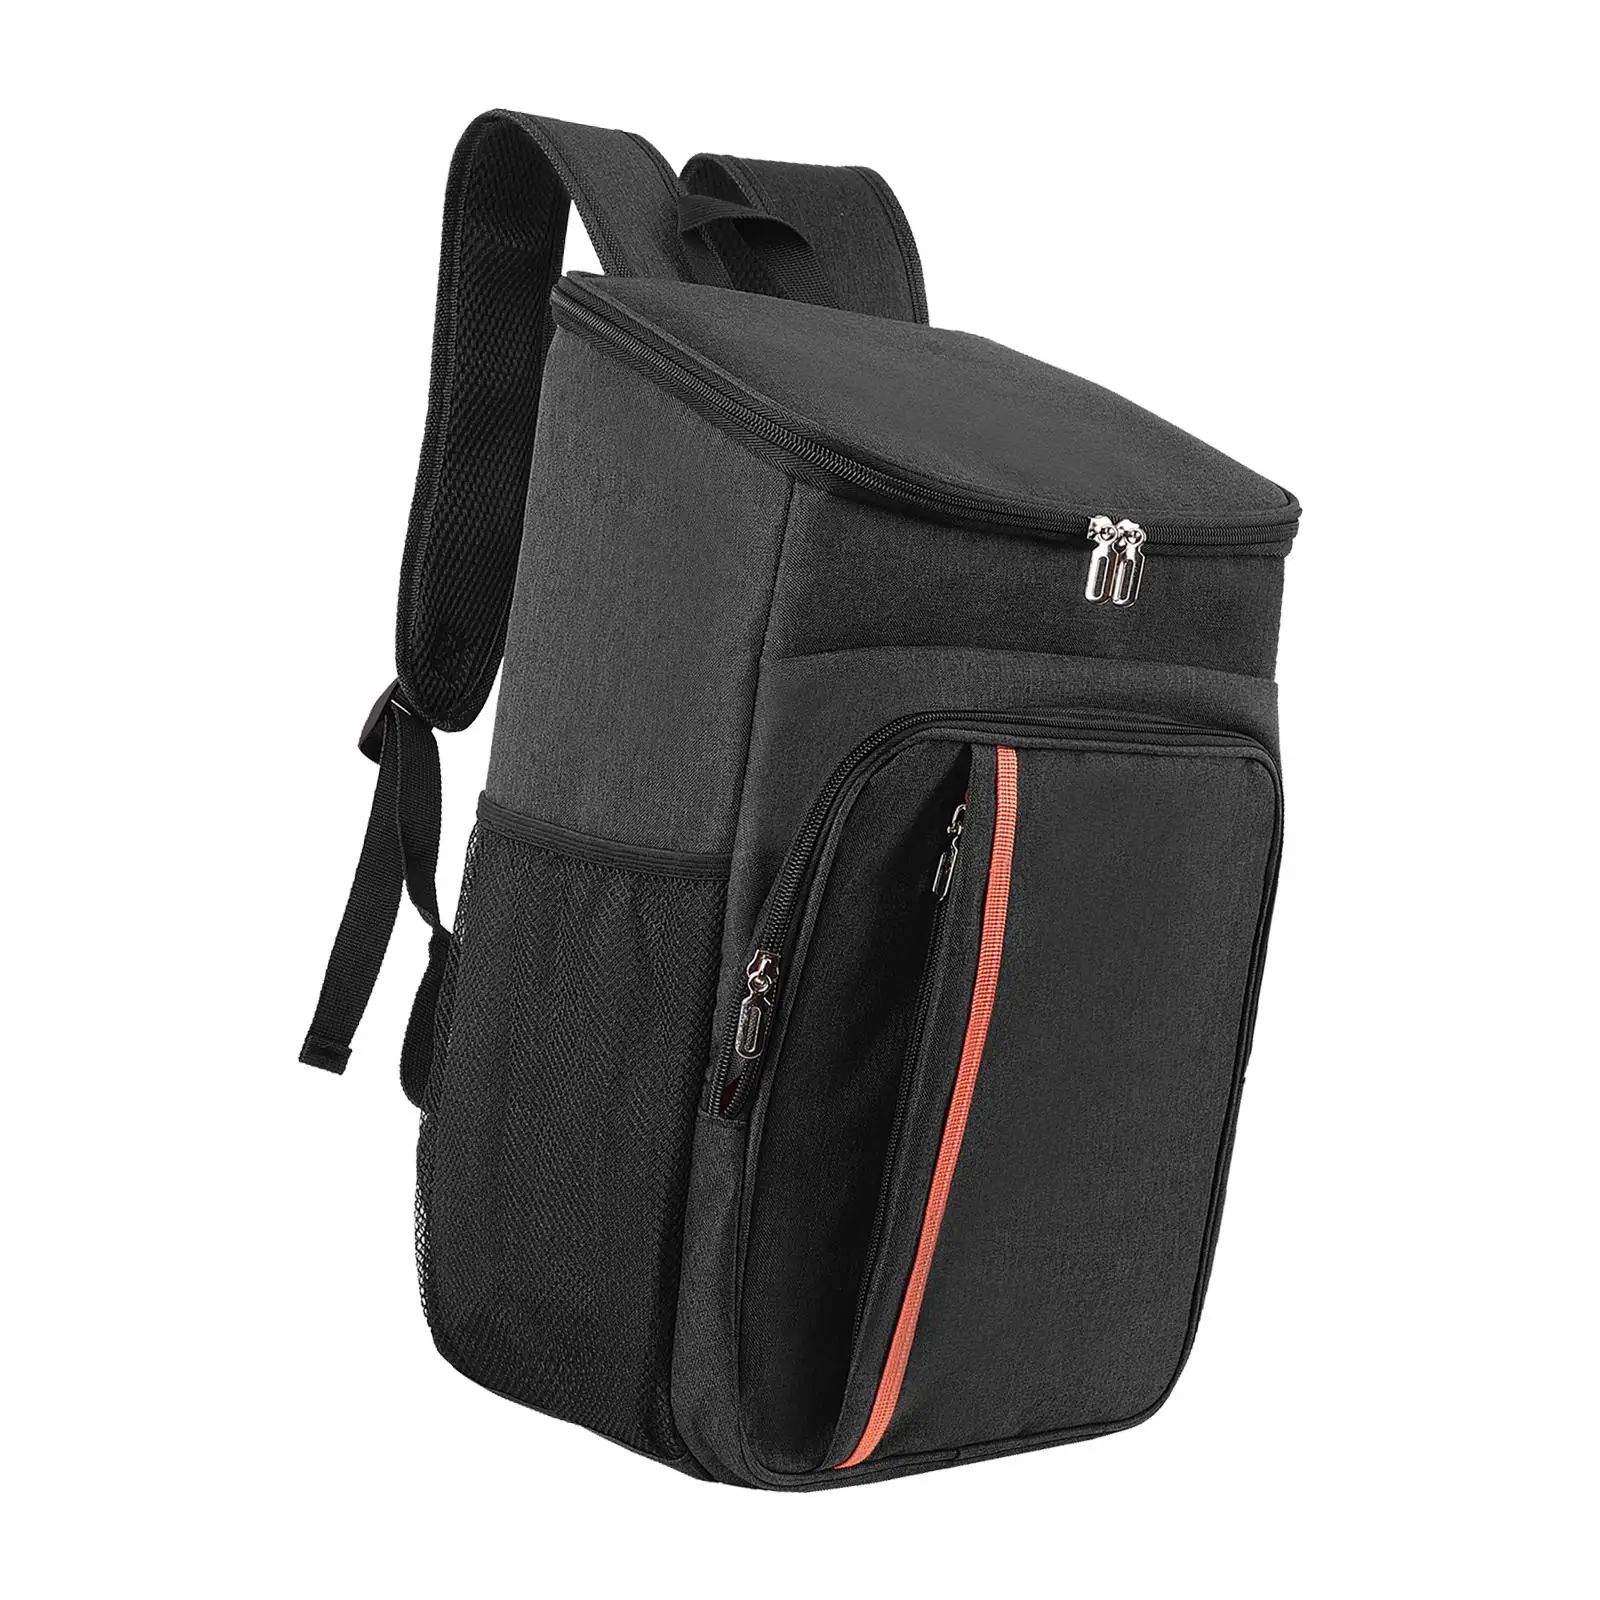 Lunch Backpack Picnic Storage Bag with Side Pockets Outdoor Picnic Bag for Food Beverage Men Women Work Travel Picnics Hiking